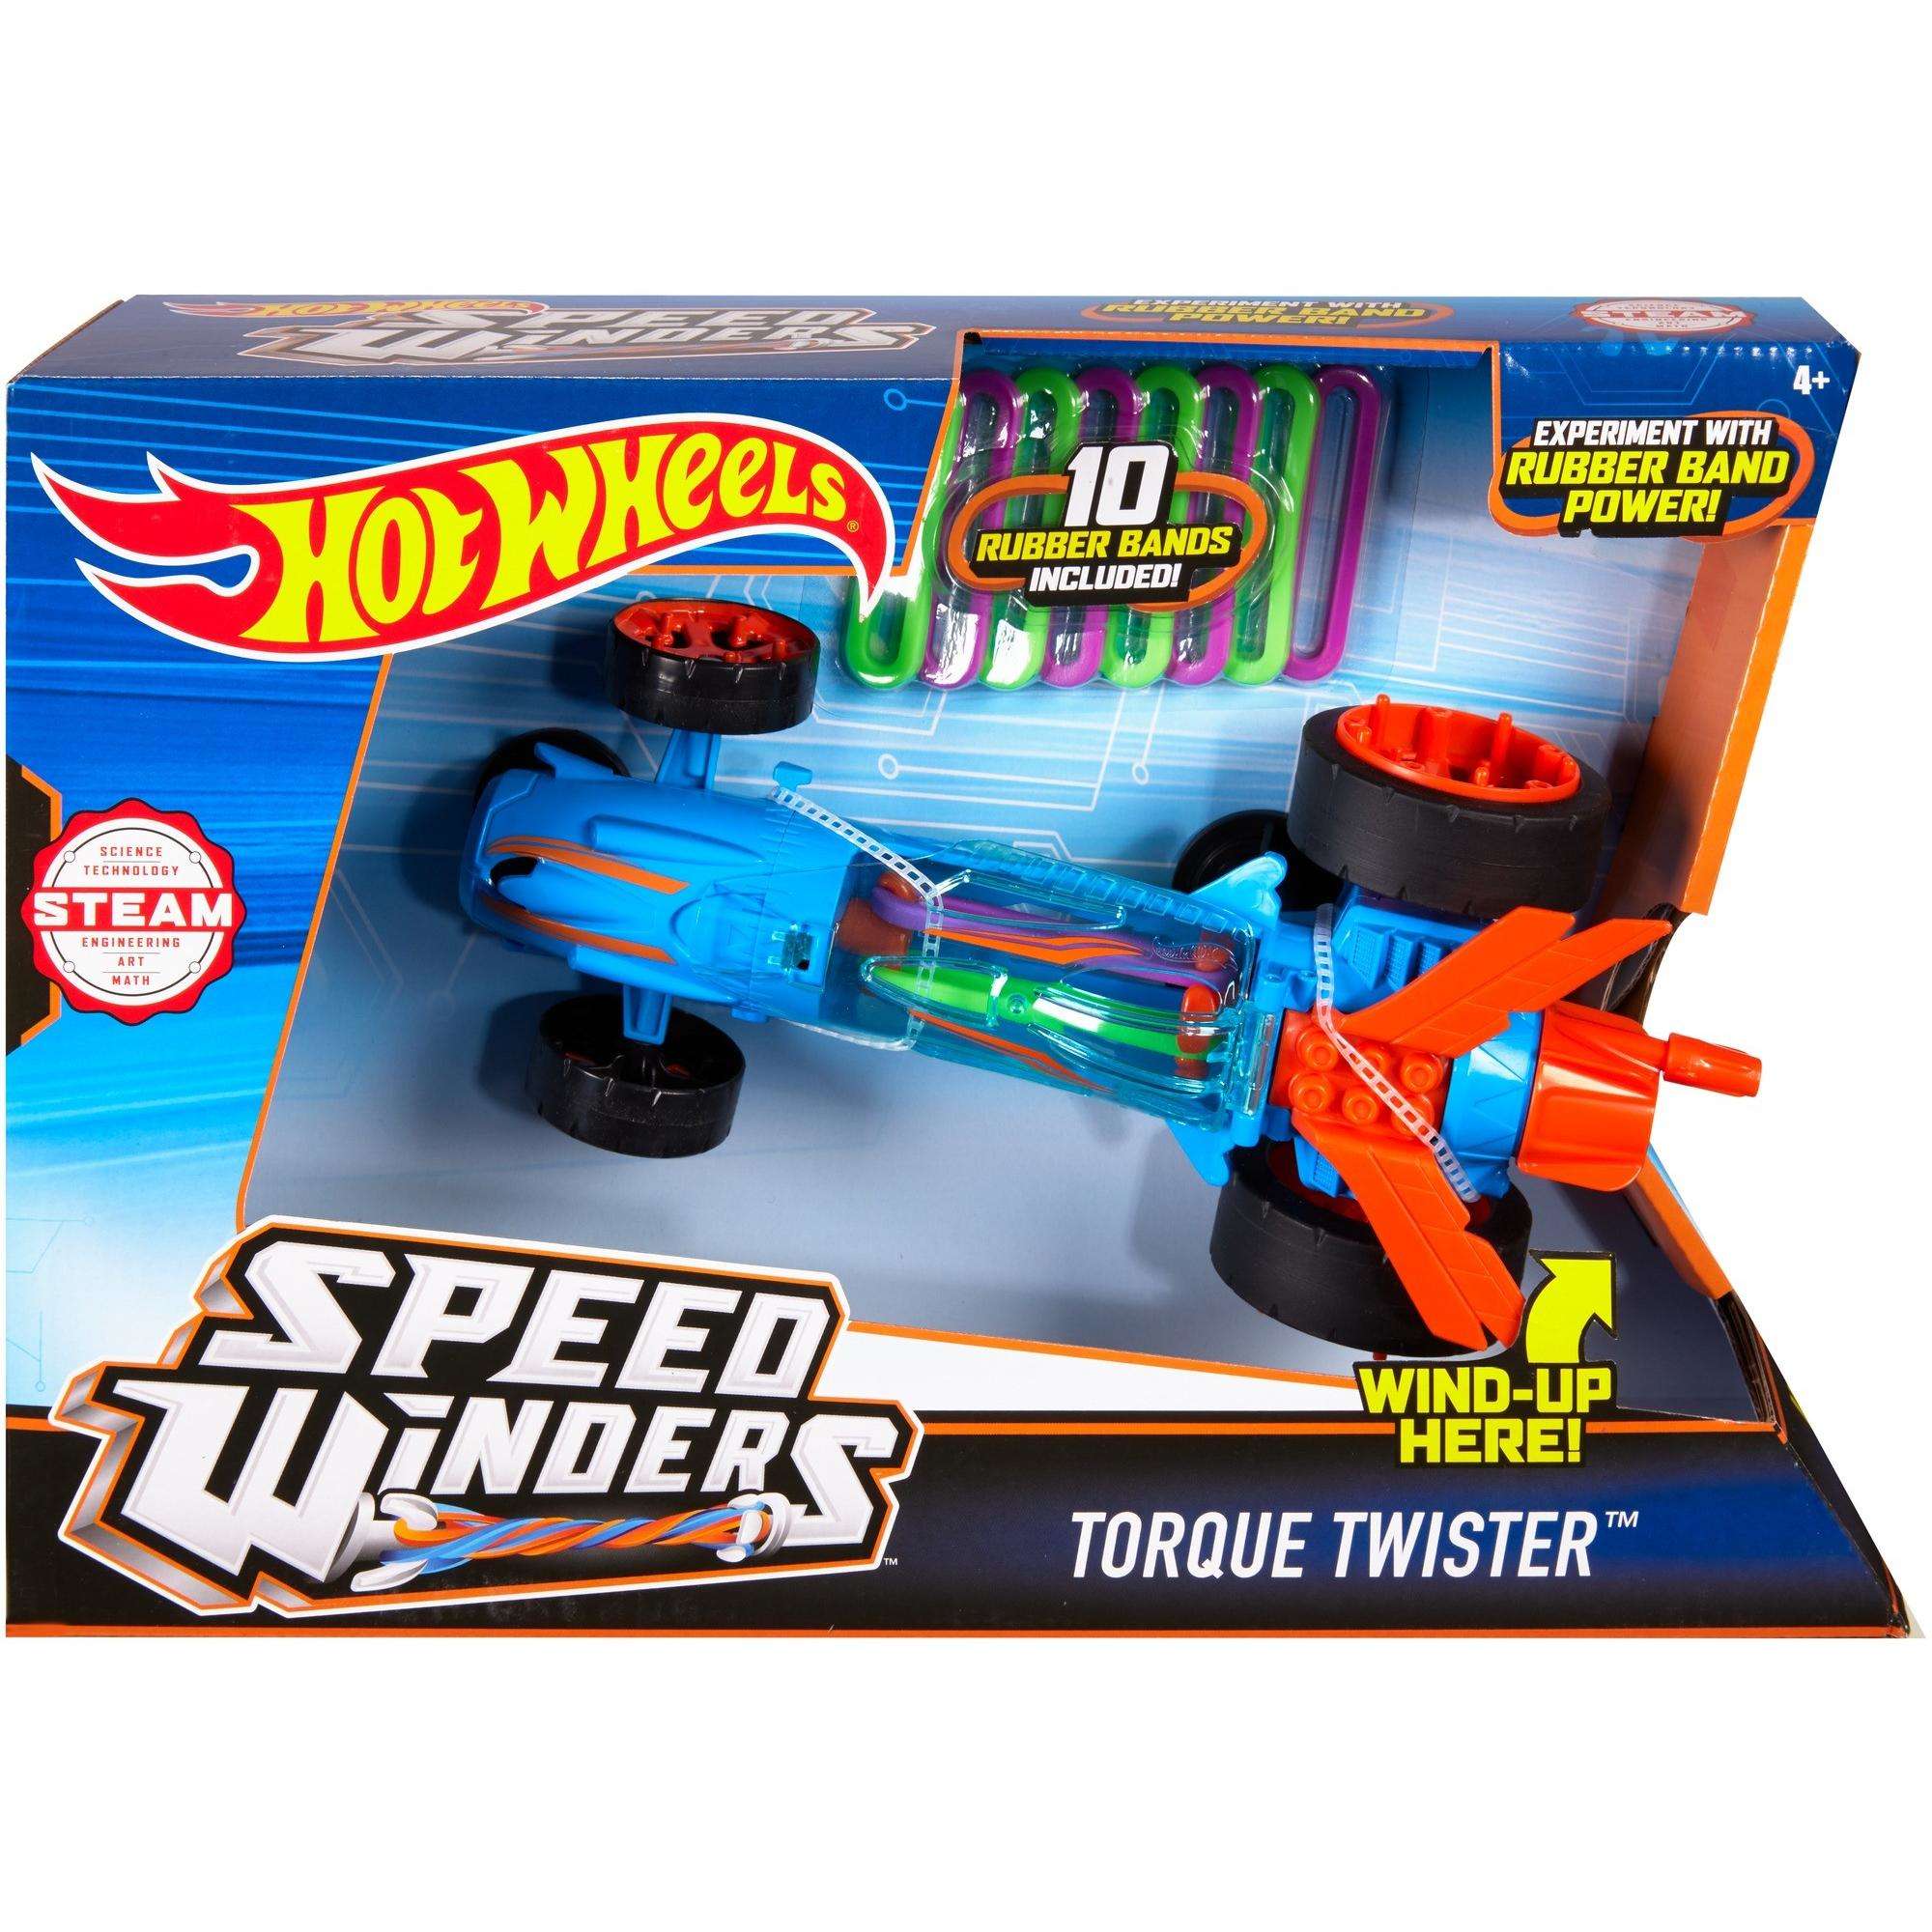 Hot Wheels Speed Winders Torque Twister Vehicle - Blue - image 4 of 5